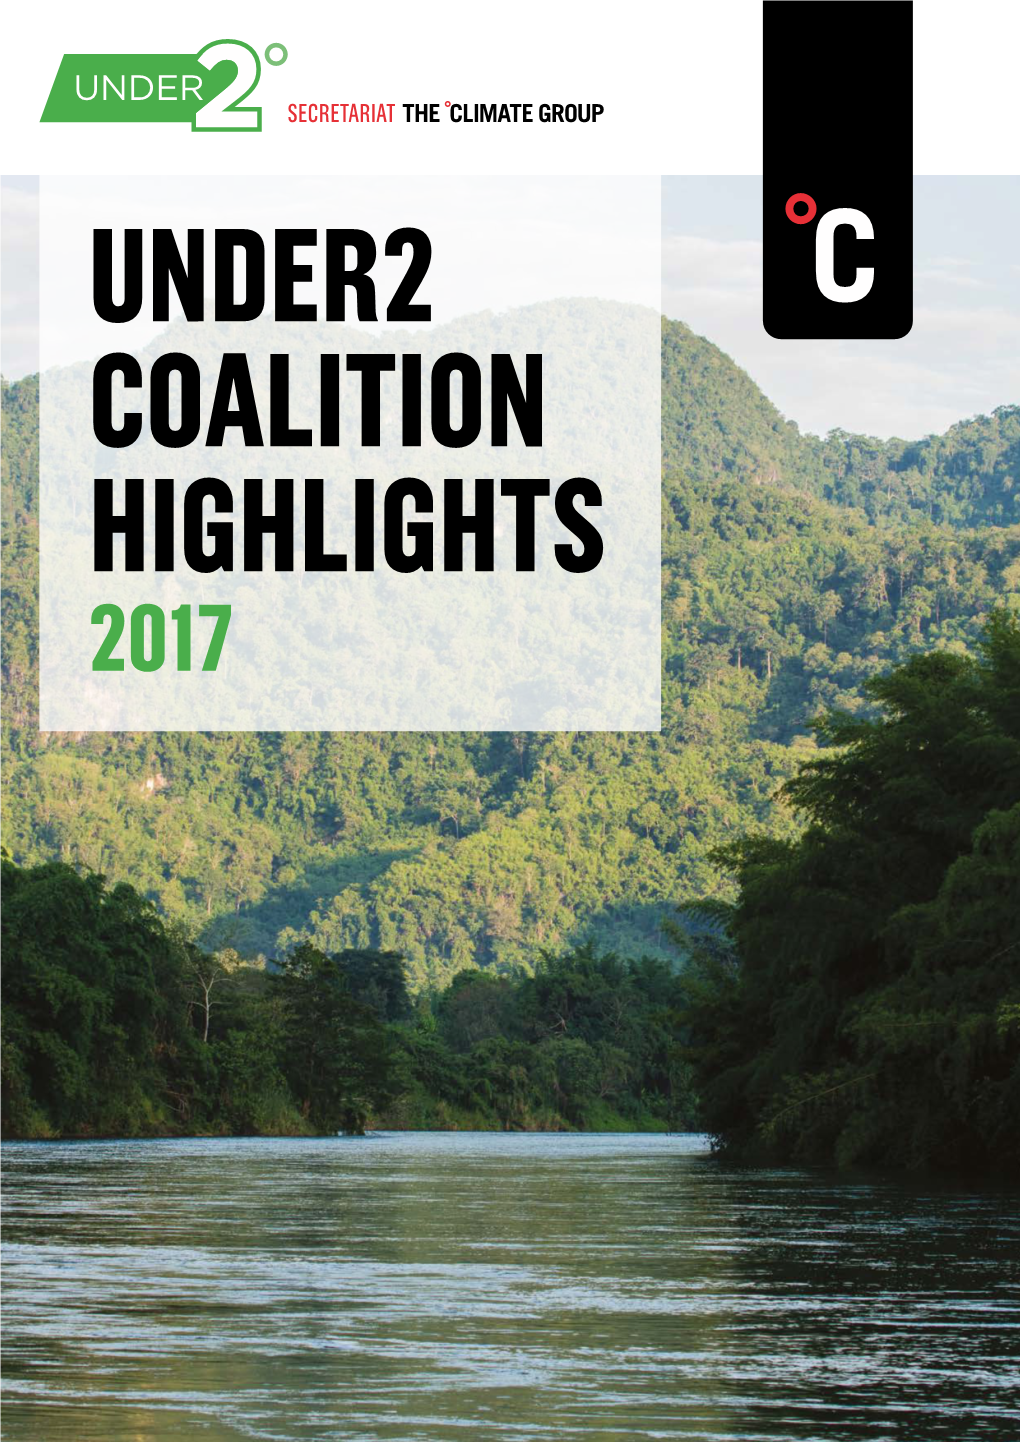 Under2 Coalition Highlights 2017 2 Under2 Coalition – Highlights 2017 Under2 Coalition – Highlights 2017 3